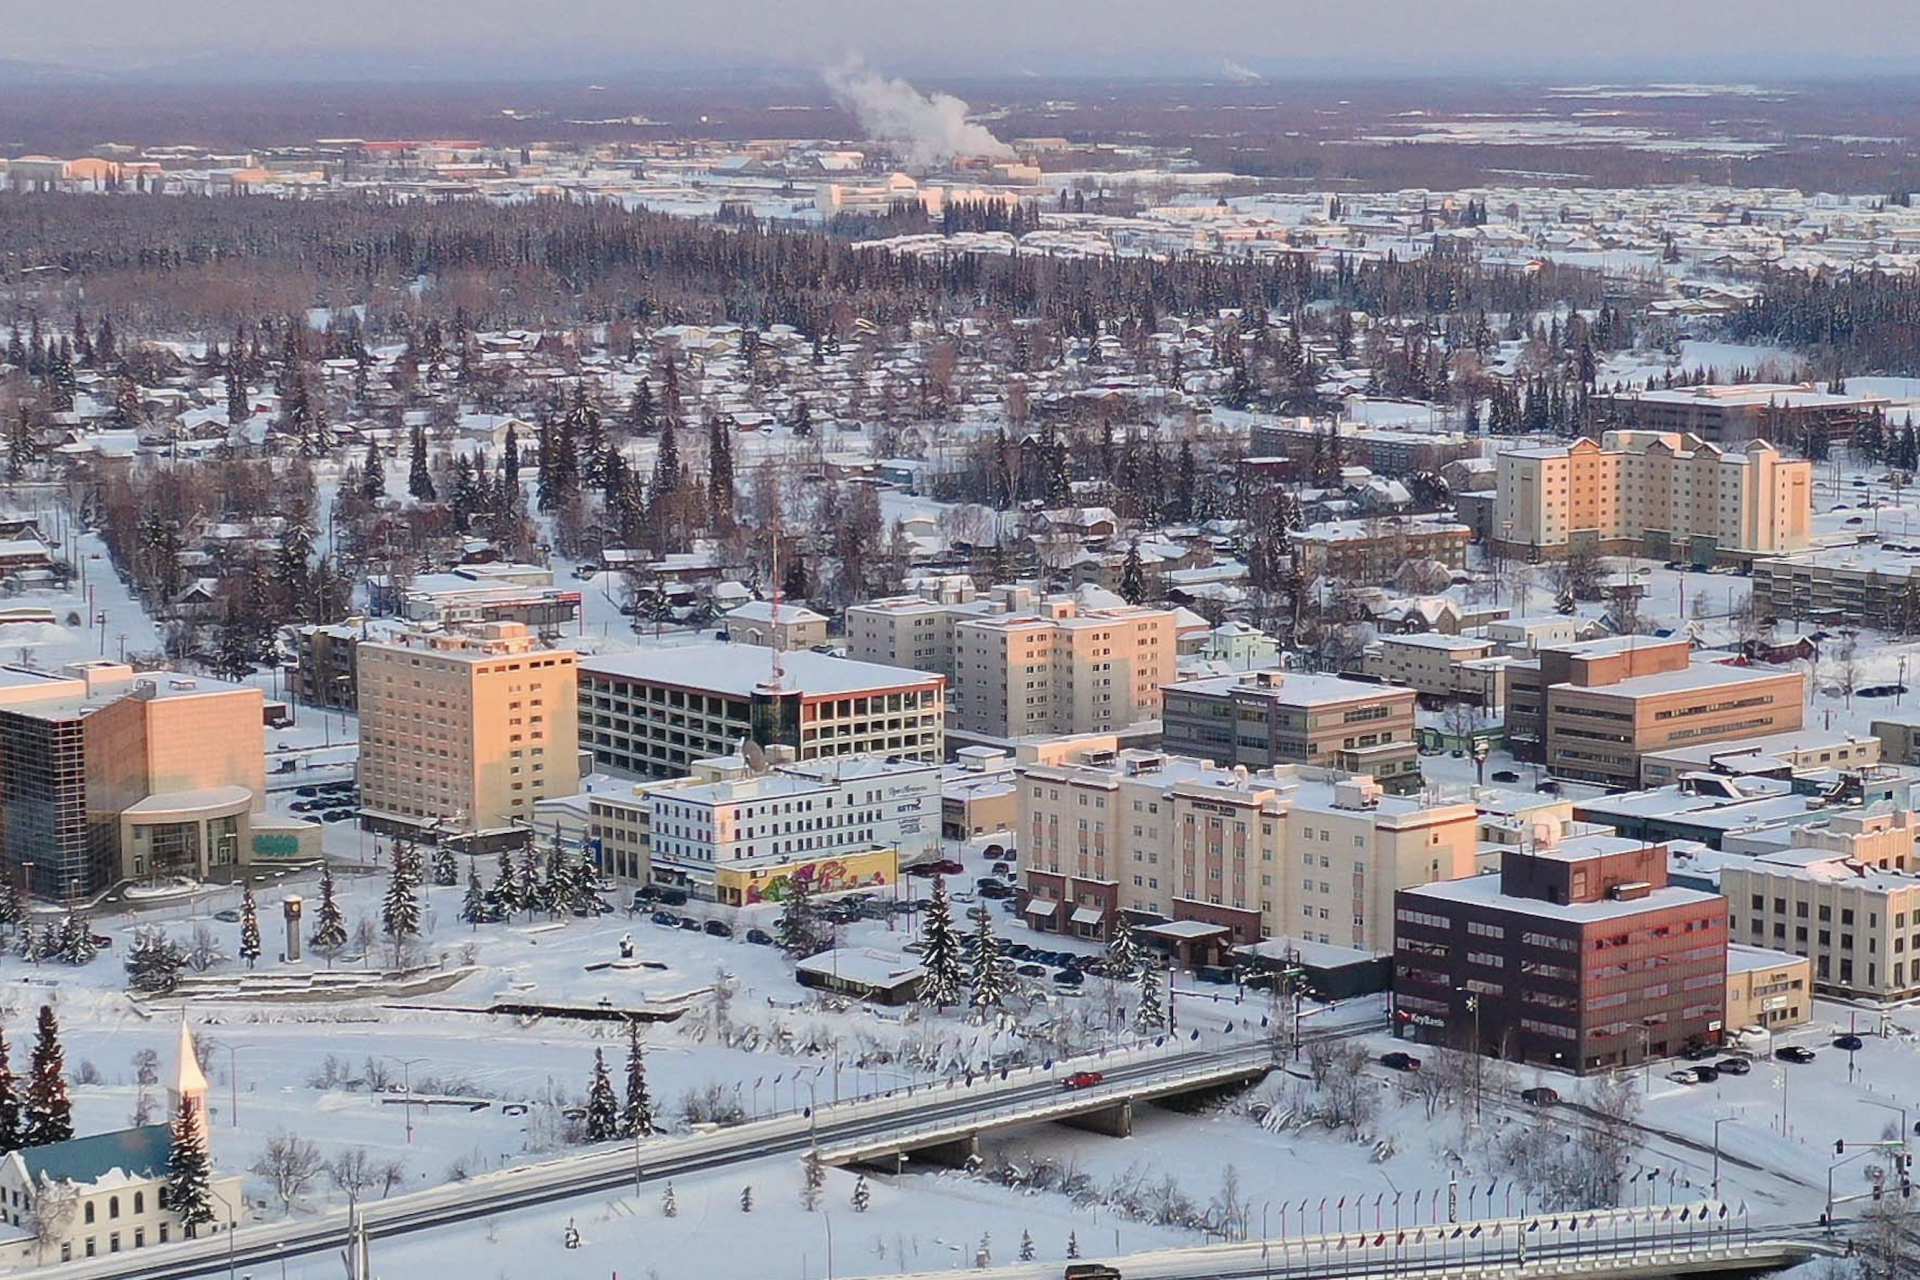 10. Fairbanks, AK